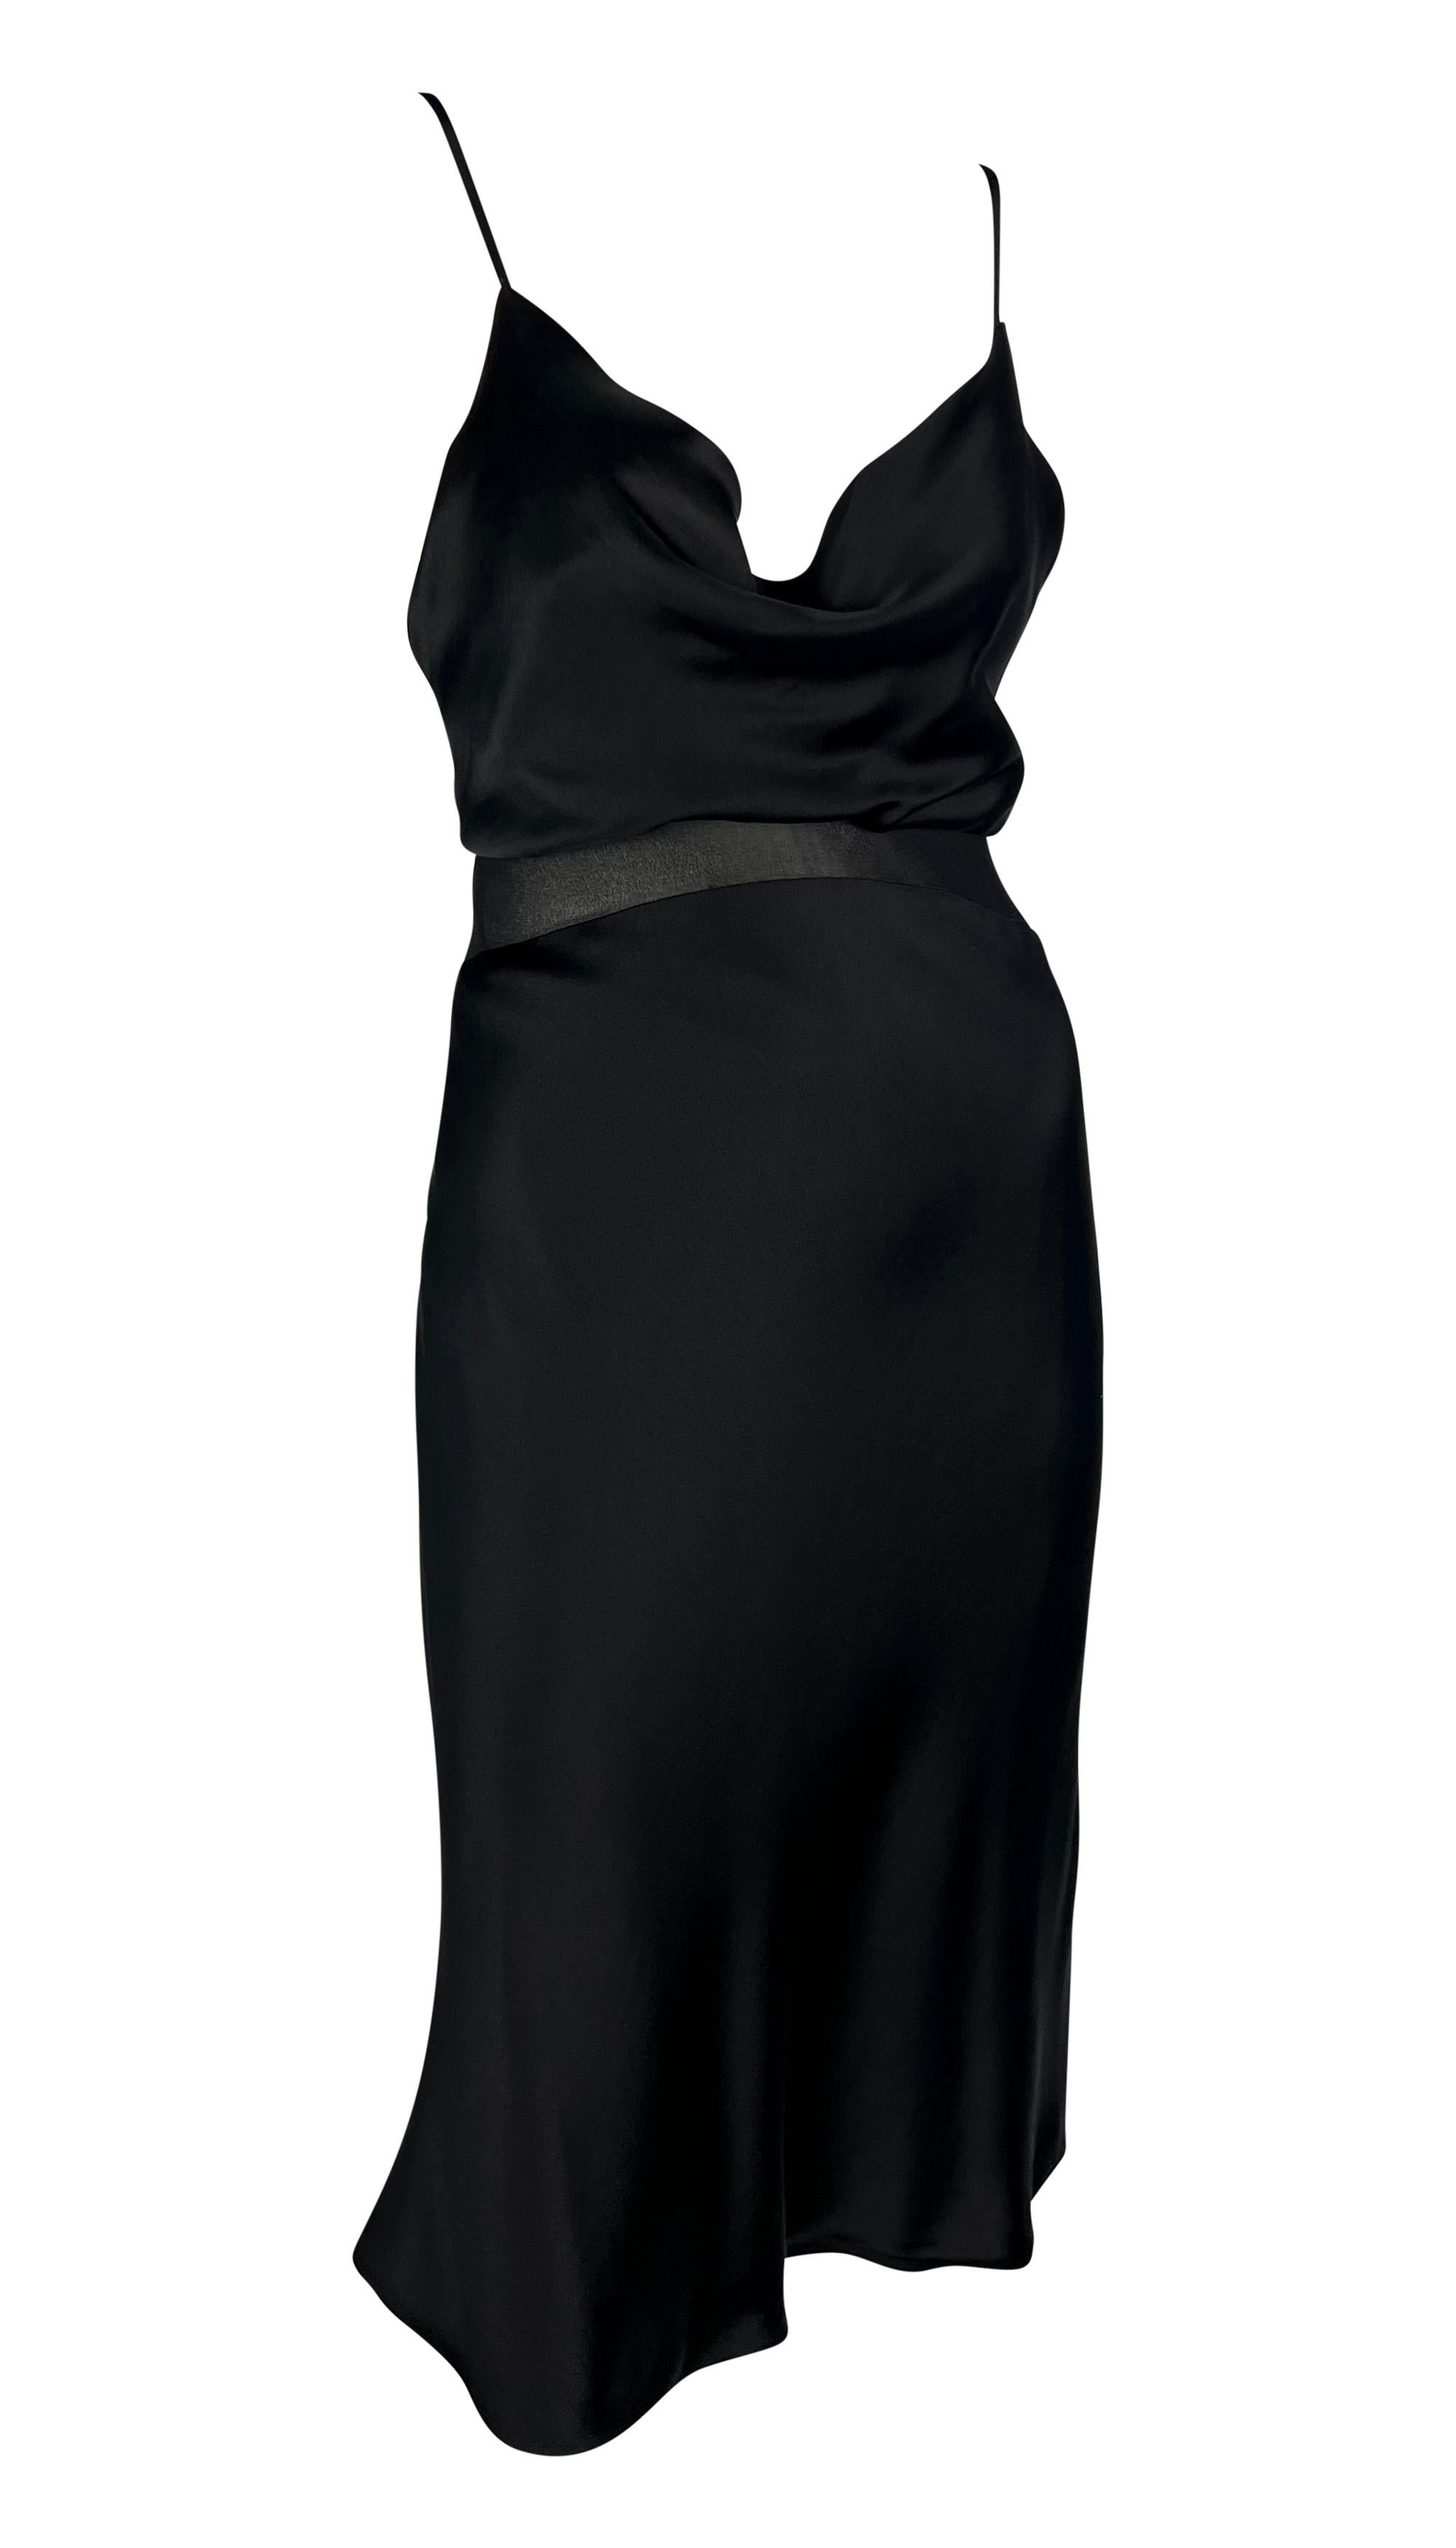 S/S 1997 Gianni Versace Black Satin Cowl Neck Sheer Waist Flare Midi Dress For Sale 4